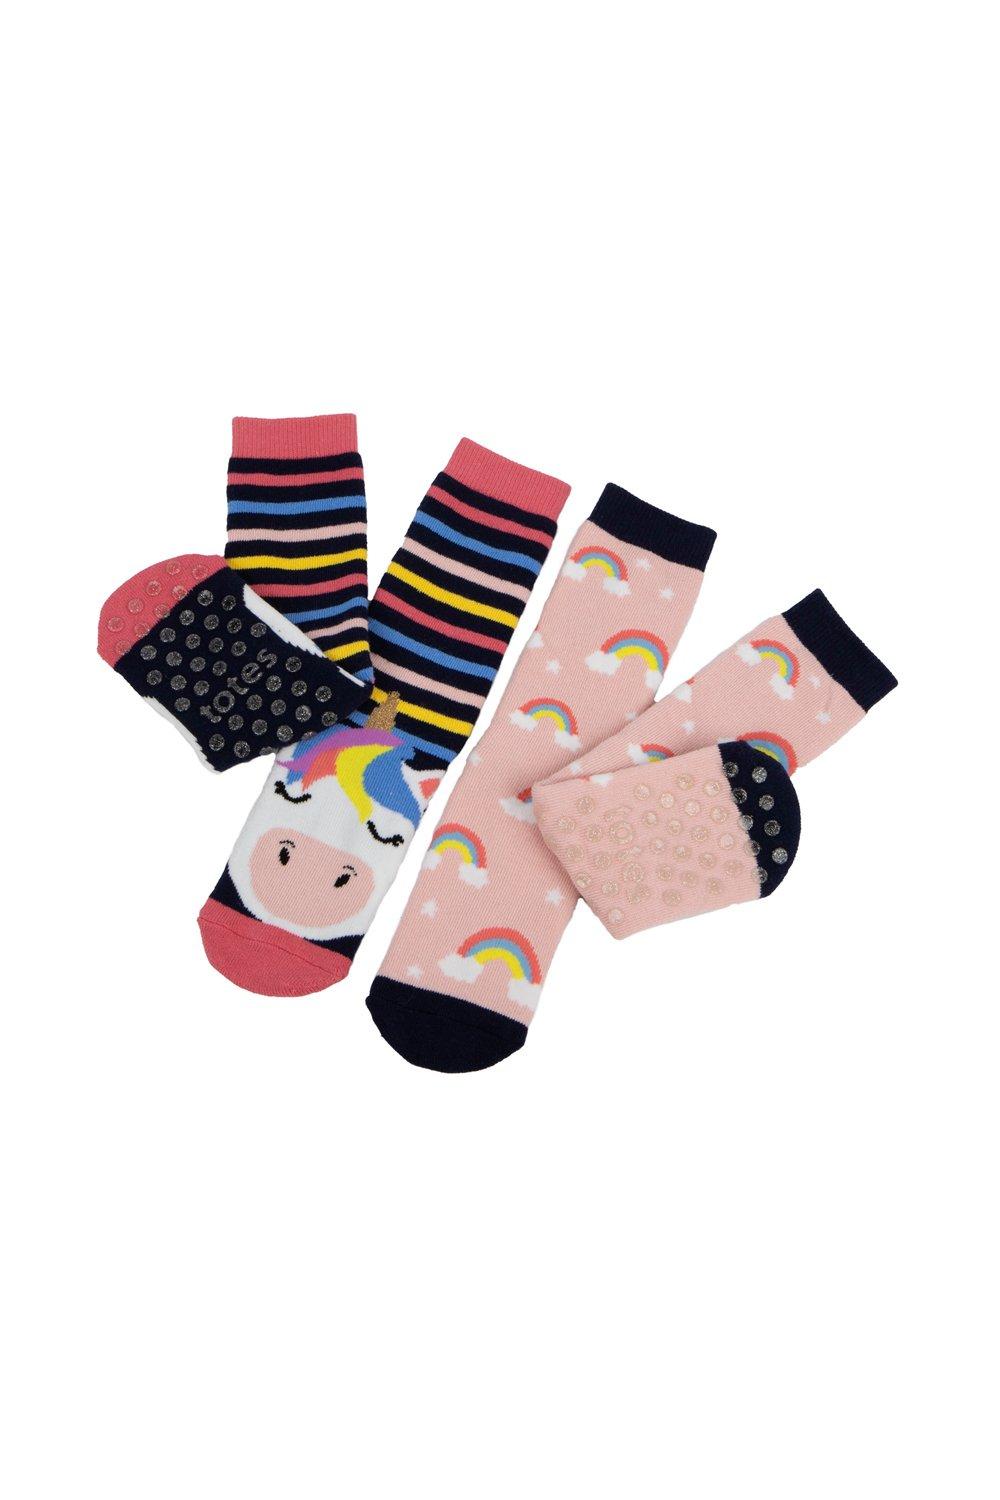 totes toasties Childrens Original Slipper Socks (Twin Pack)